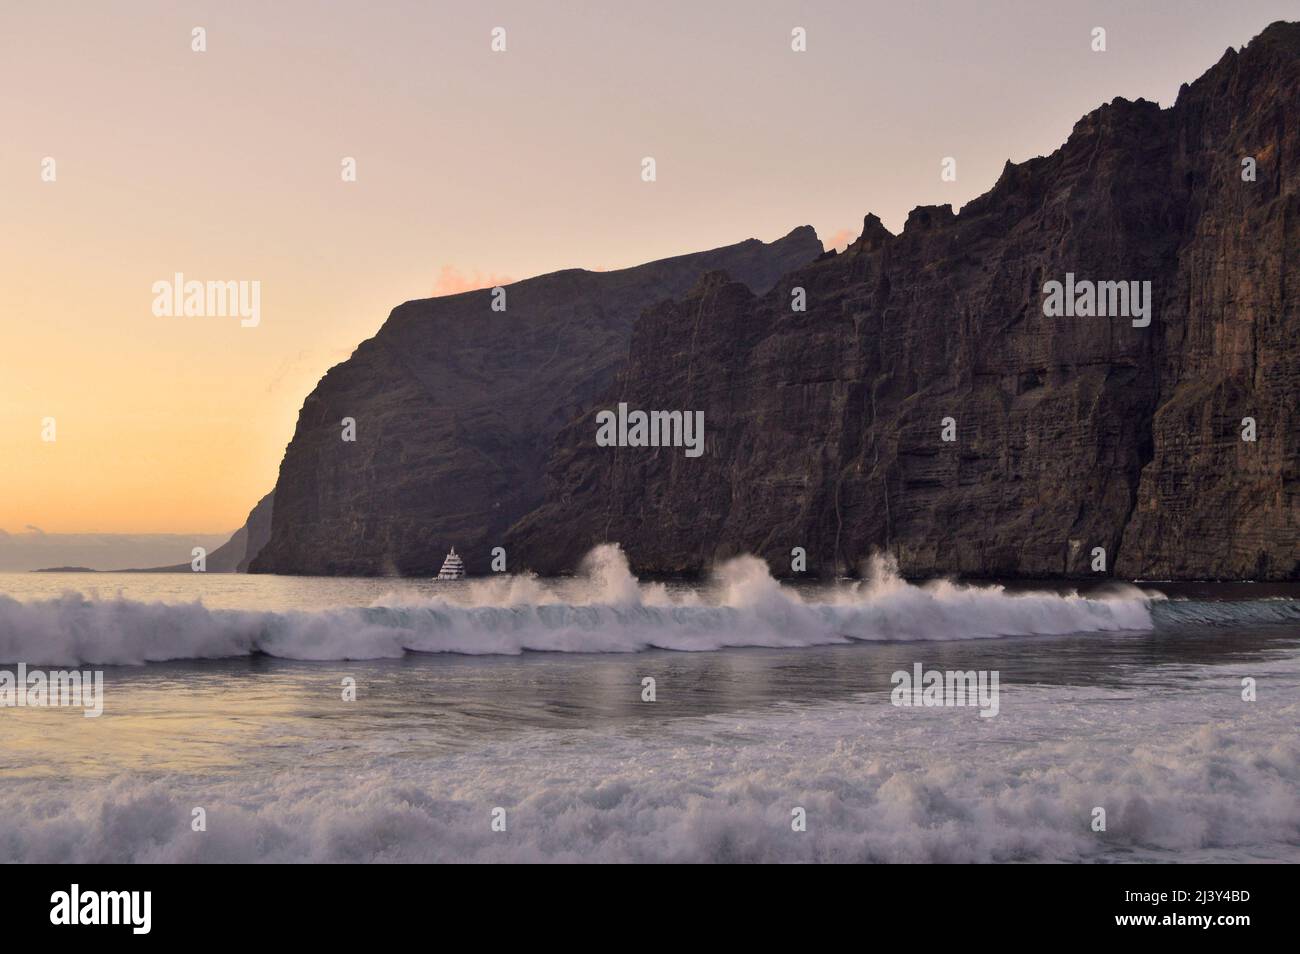 Acantilados de Los Gigantes (Cliffs of the Giants), Atlantic coast northwest of Tenerife Canary islands Spain. Stock Photo